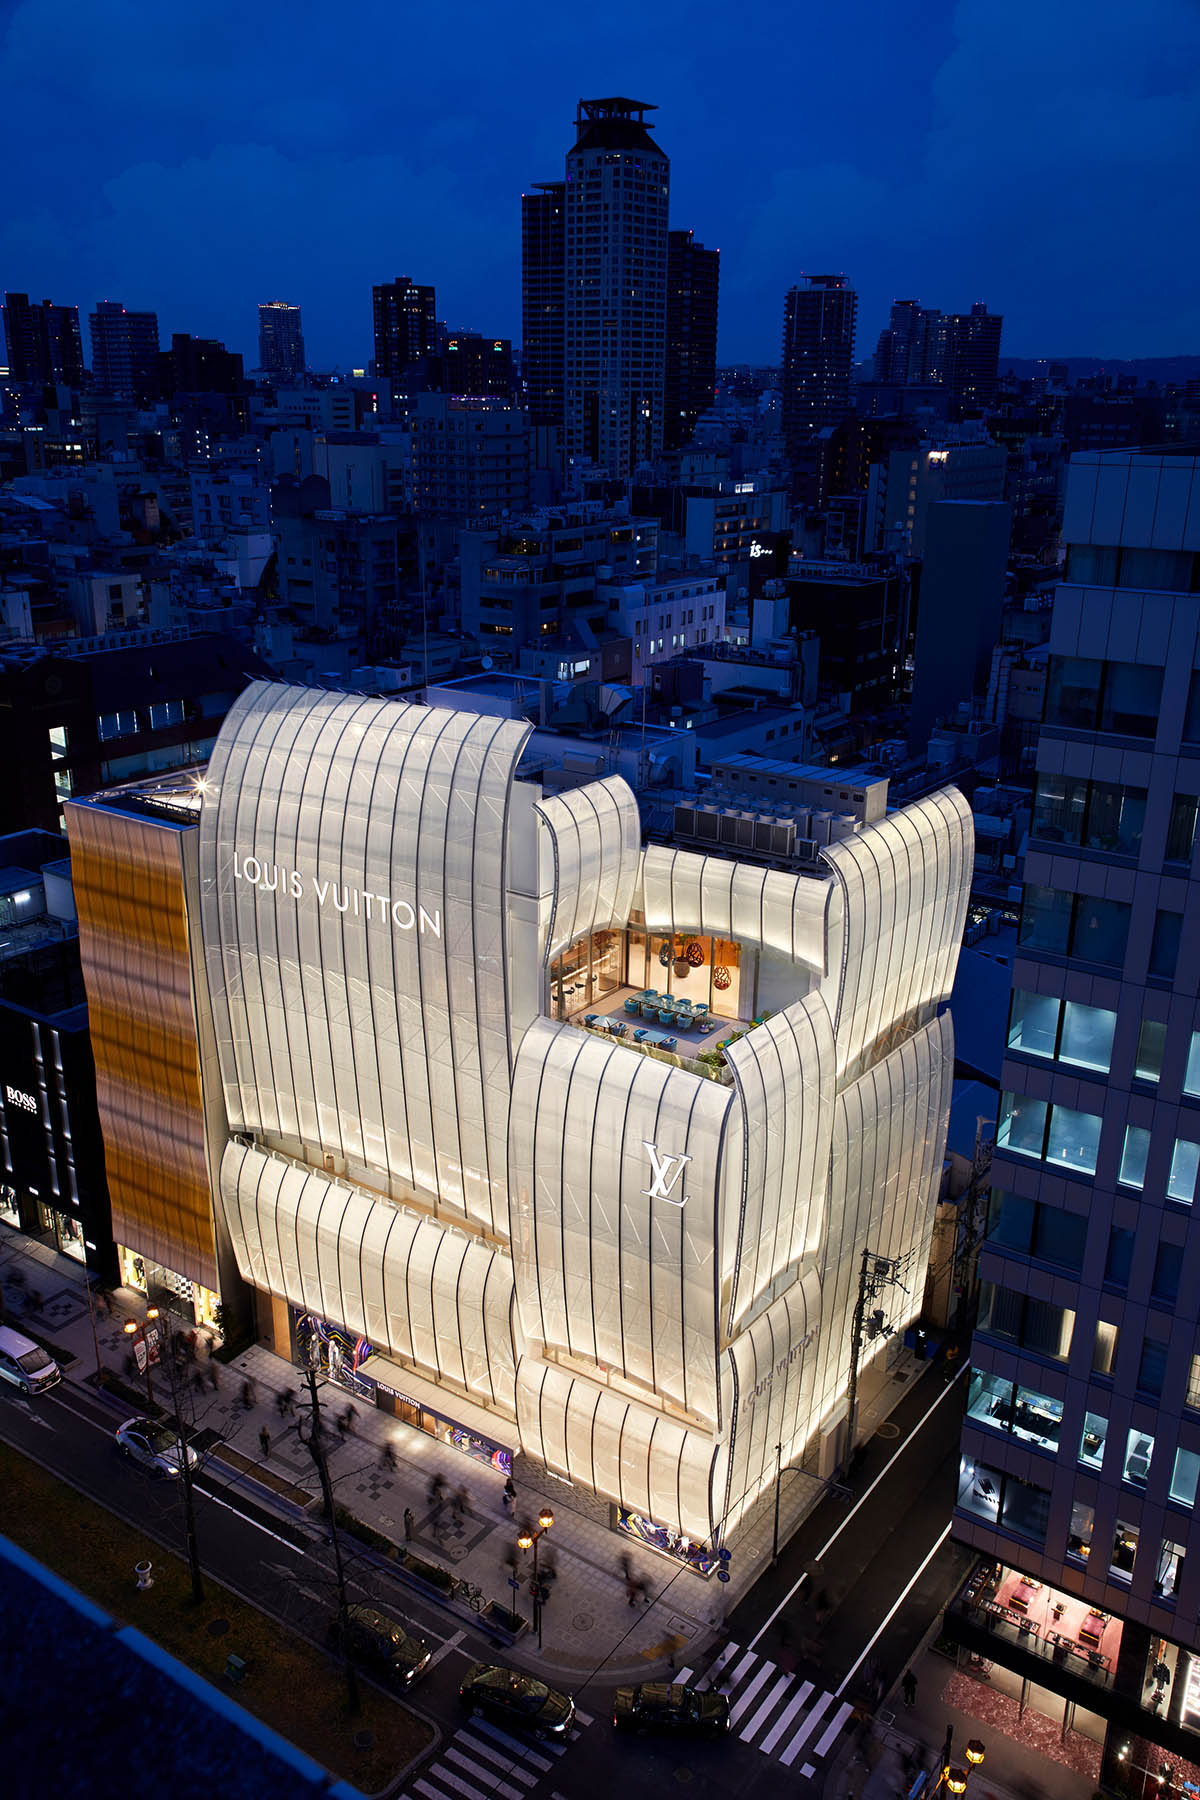 jun aoki's tokyo louis vuitton store features patterned façades